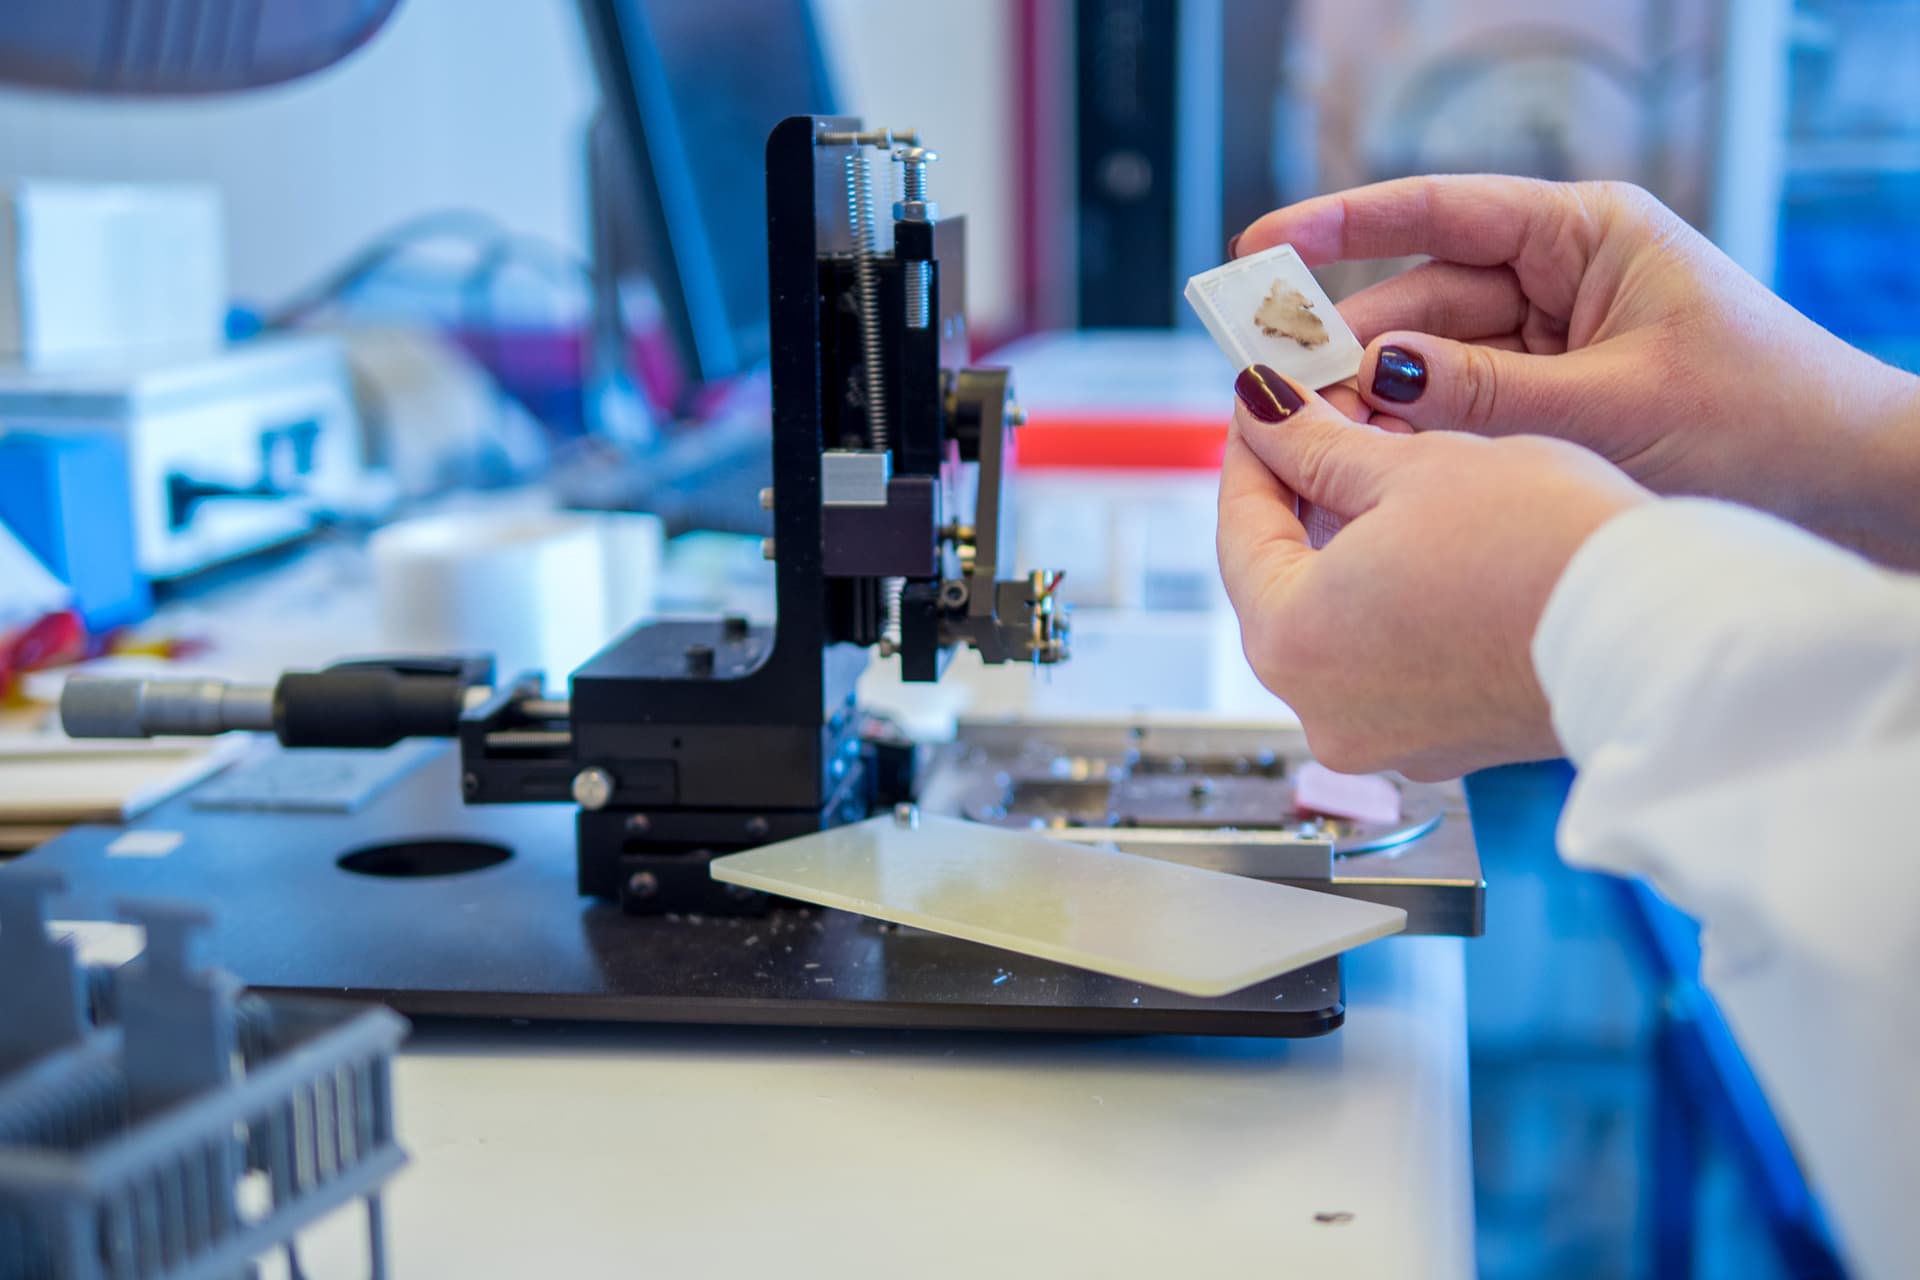 Biobanking samples on slide in lab